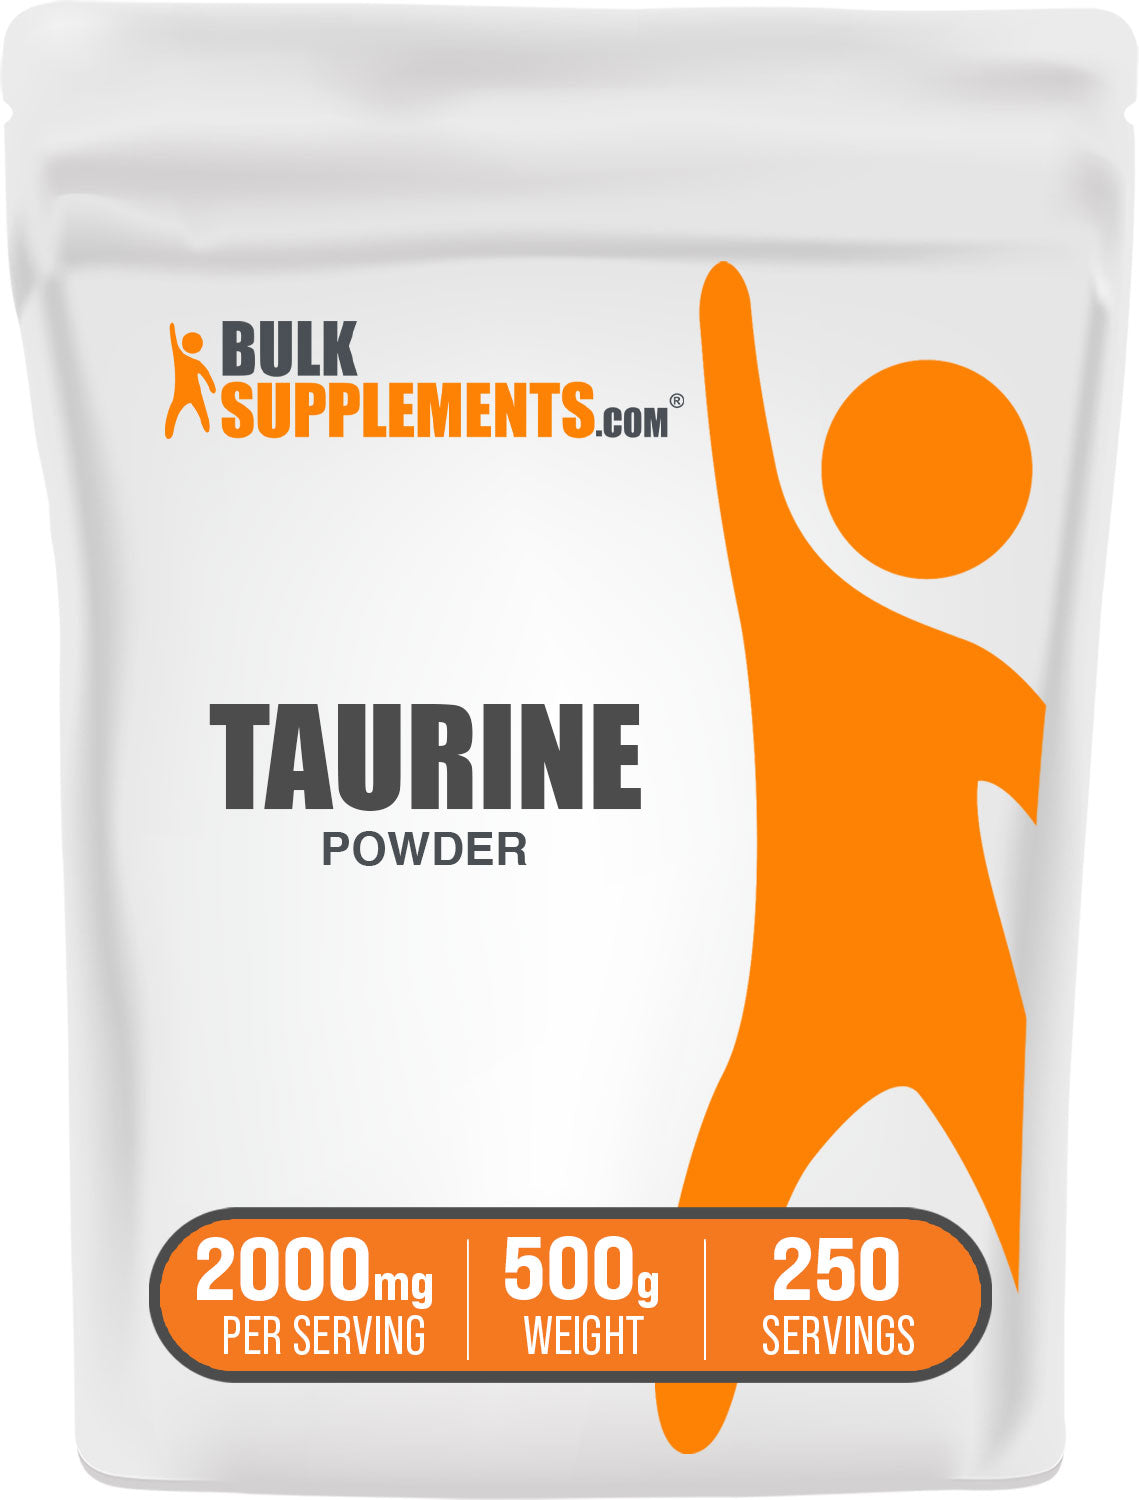 BulkSupplements.com Taurine Powder 500g bag 